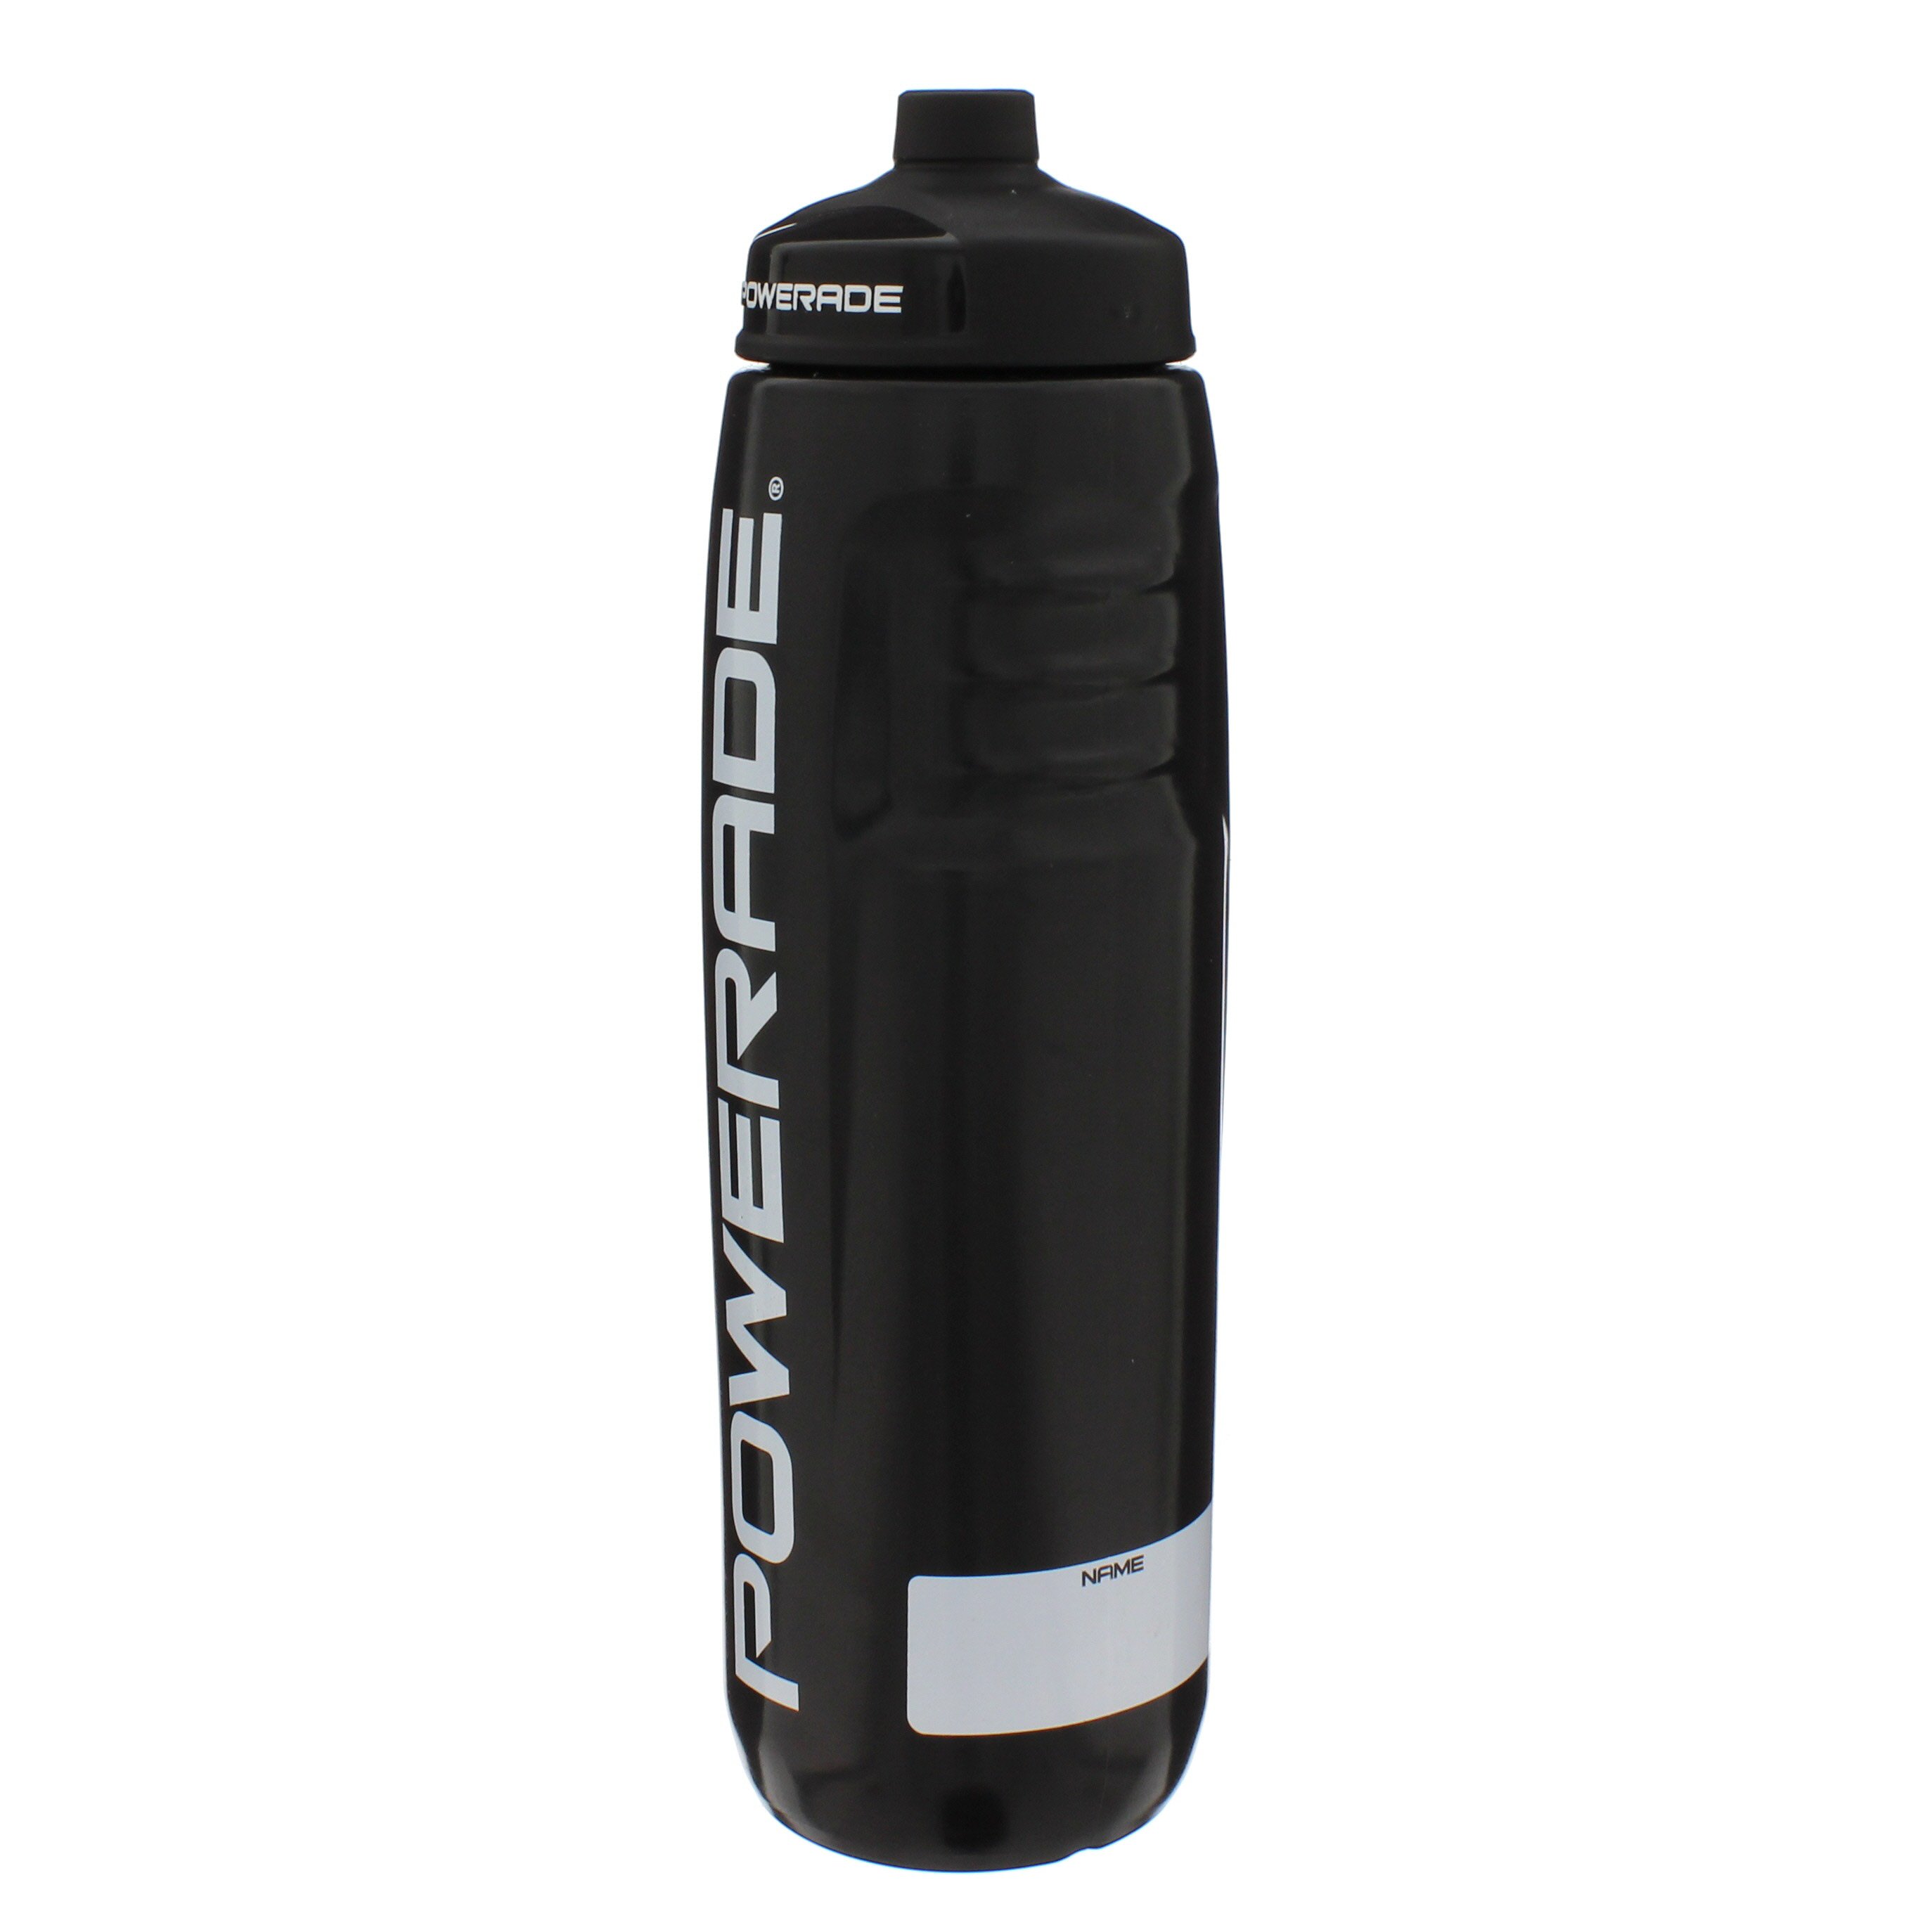 Powerade Squeeze Bottle, Black 32oz